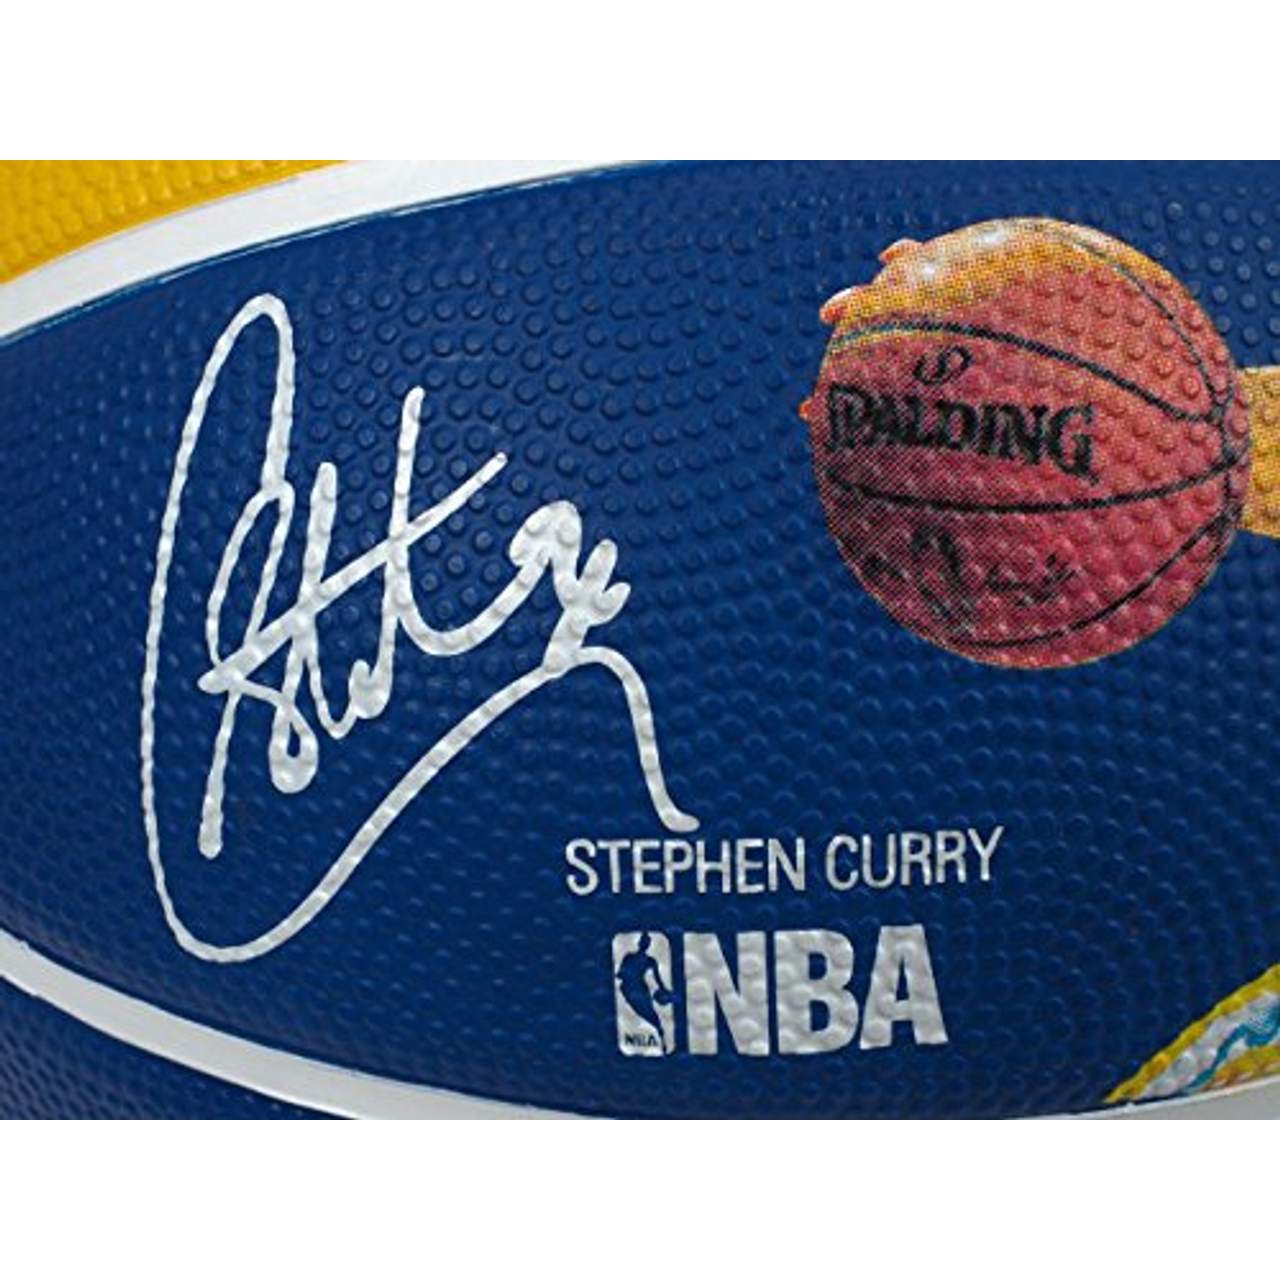 Spalding Ball NBA player stephen curry 83-343Z Basketball